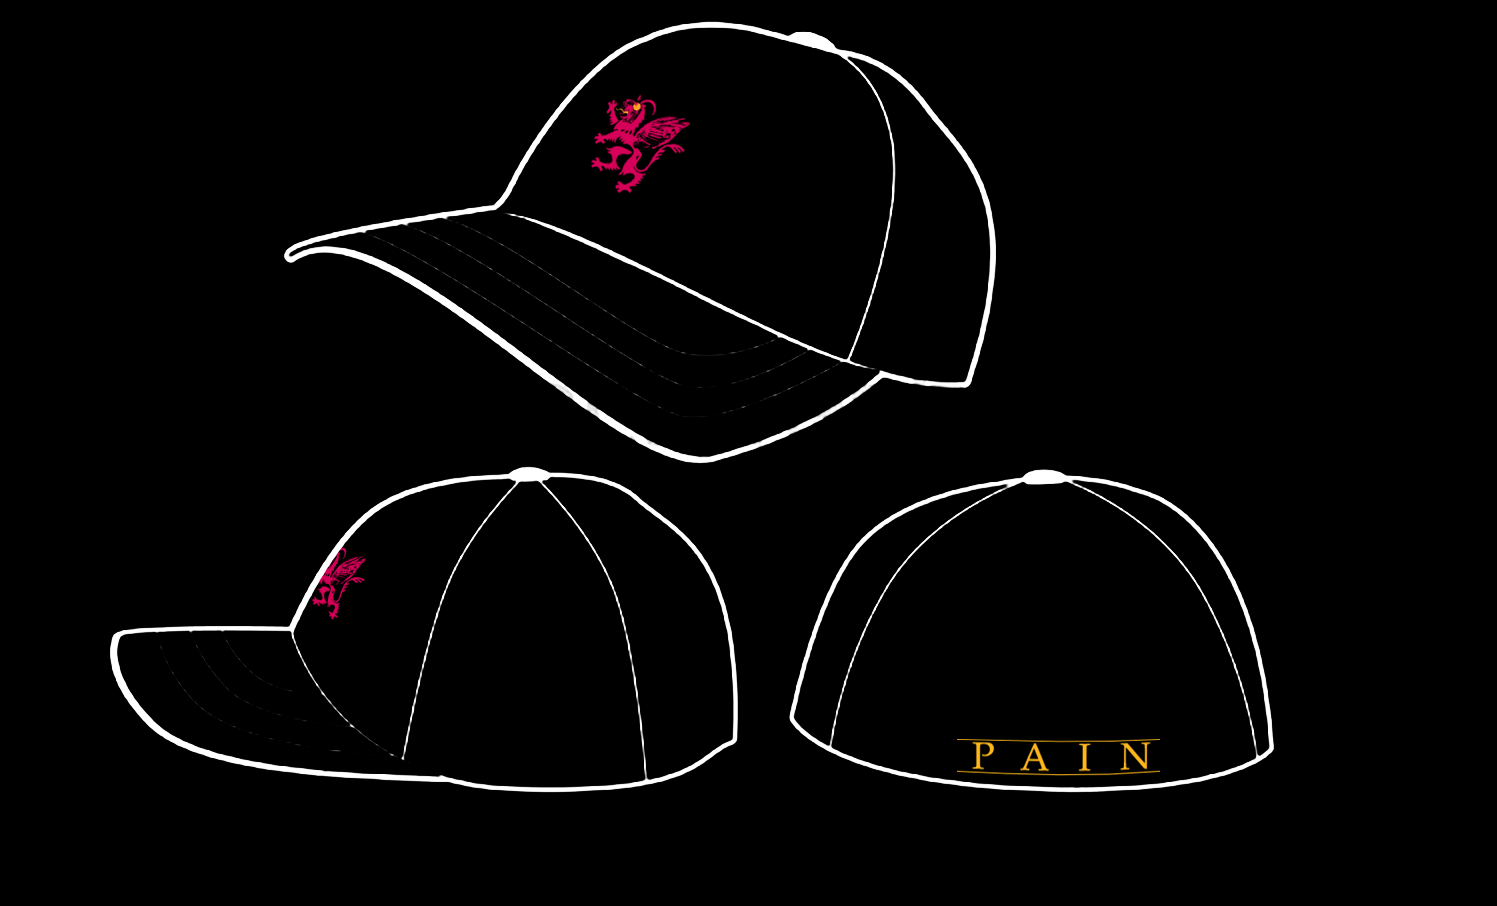 hat-design-template-baseball-cap-or-hat-vector-template-design-vector-illustration.png